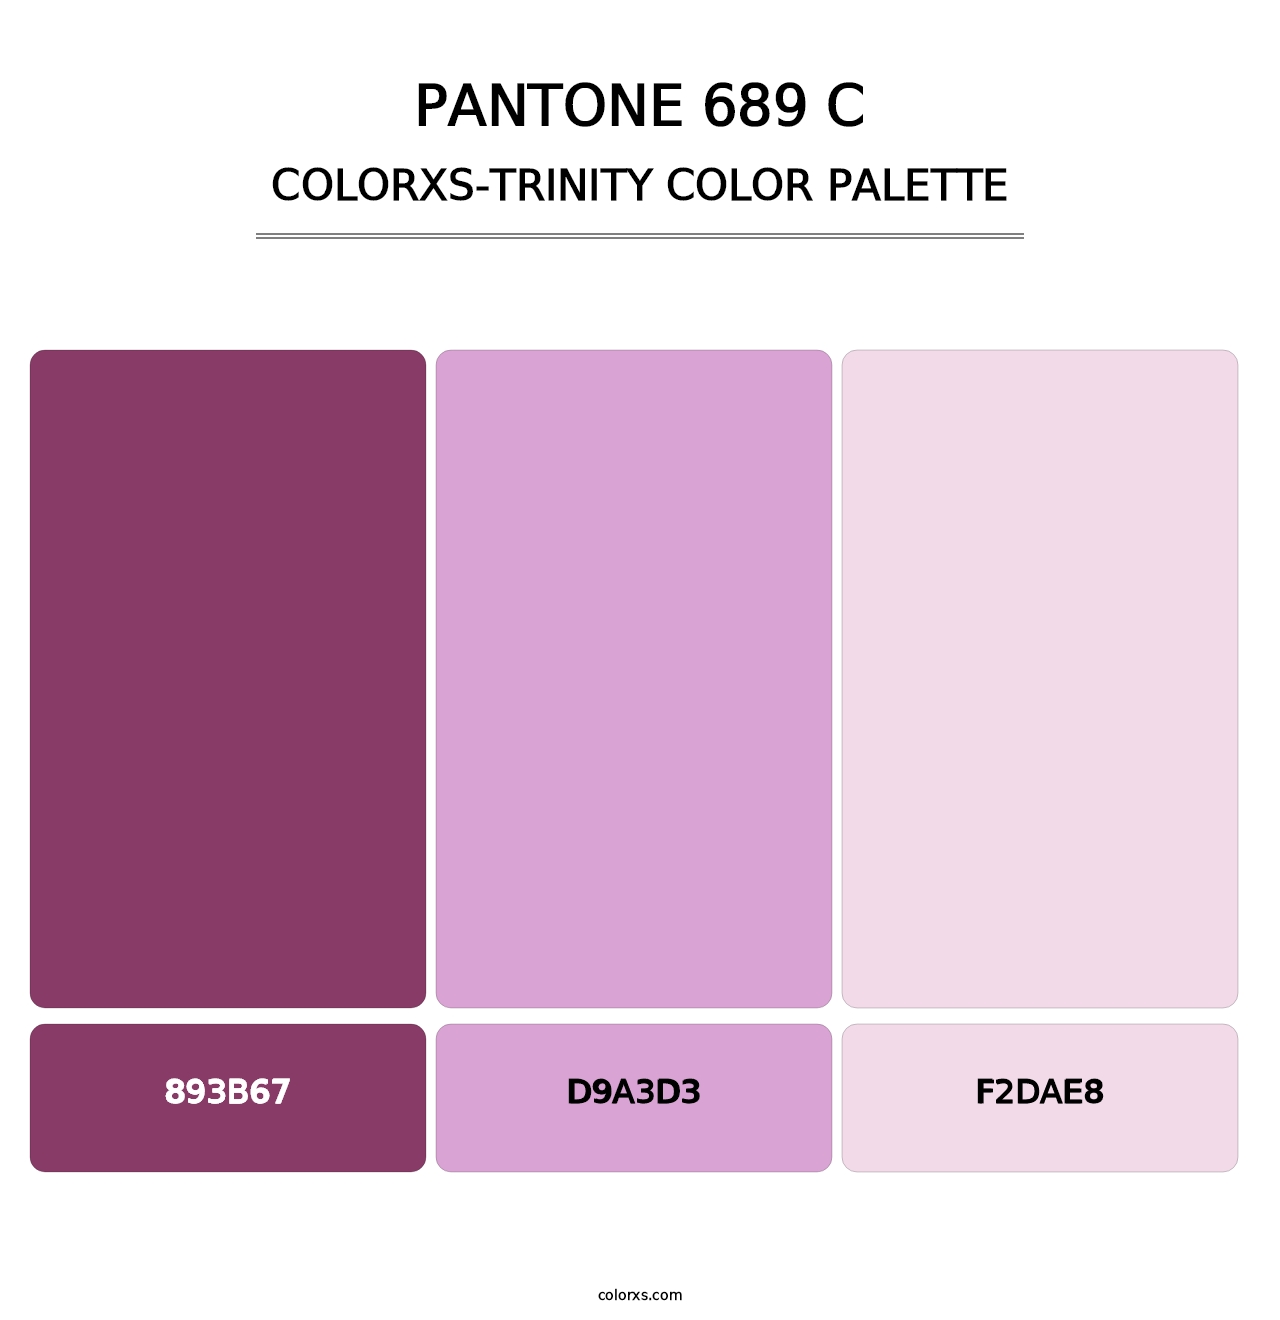 PANTONE 689 C - Colorxs Trinity Palette